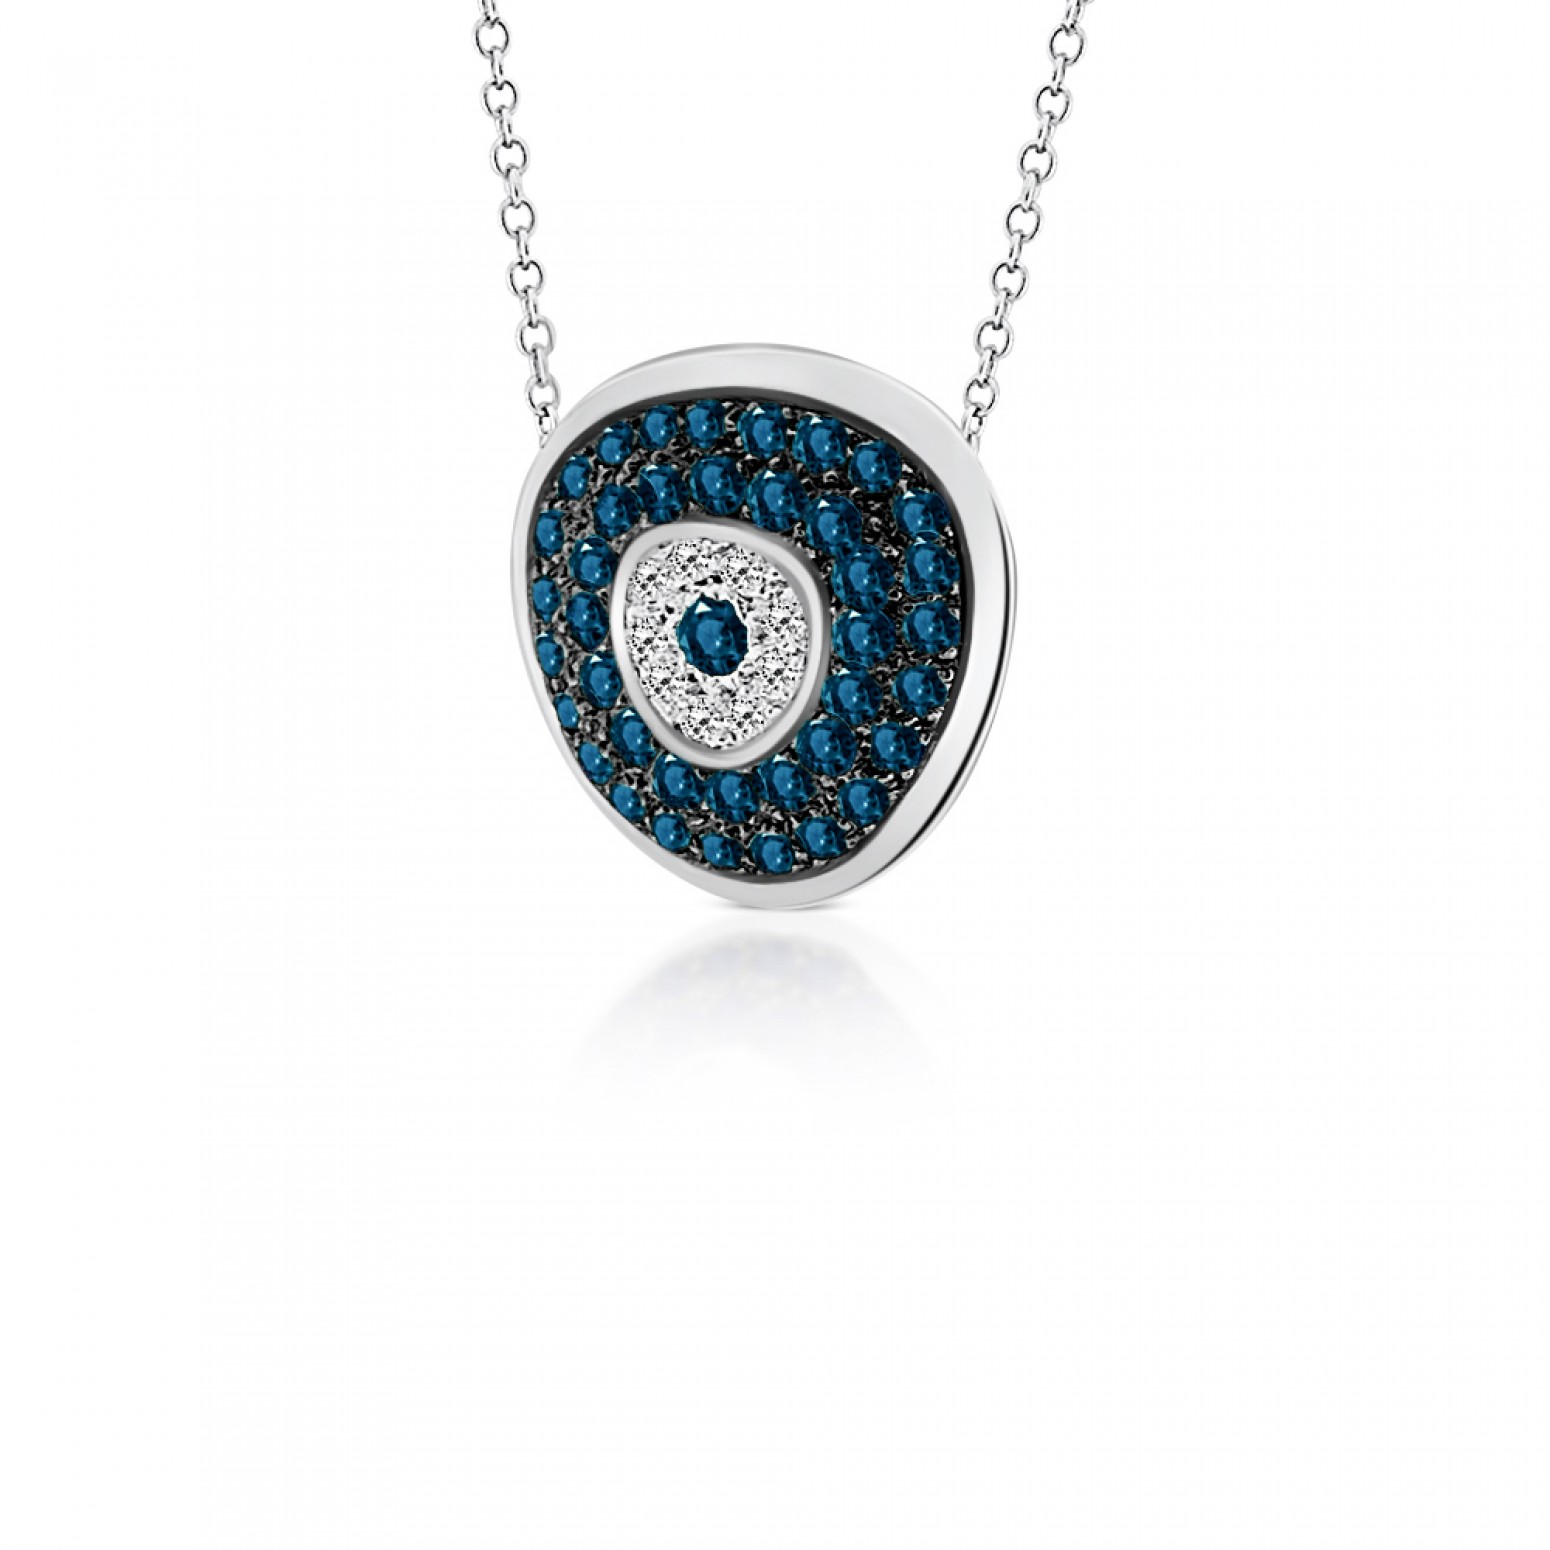 Eye necklace, Κ18 white gold with London Blue topaz 1.35ct and diamonds 0.10ct, VS1, H ko5970 NECKLACES Κοσμηματα - chrilia.gr